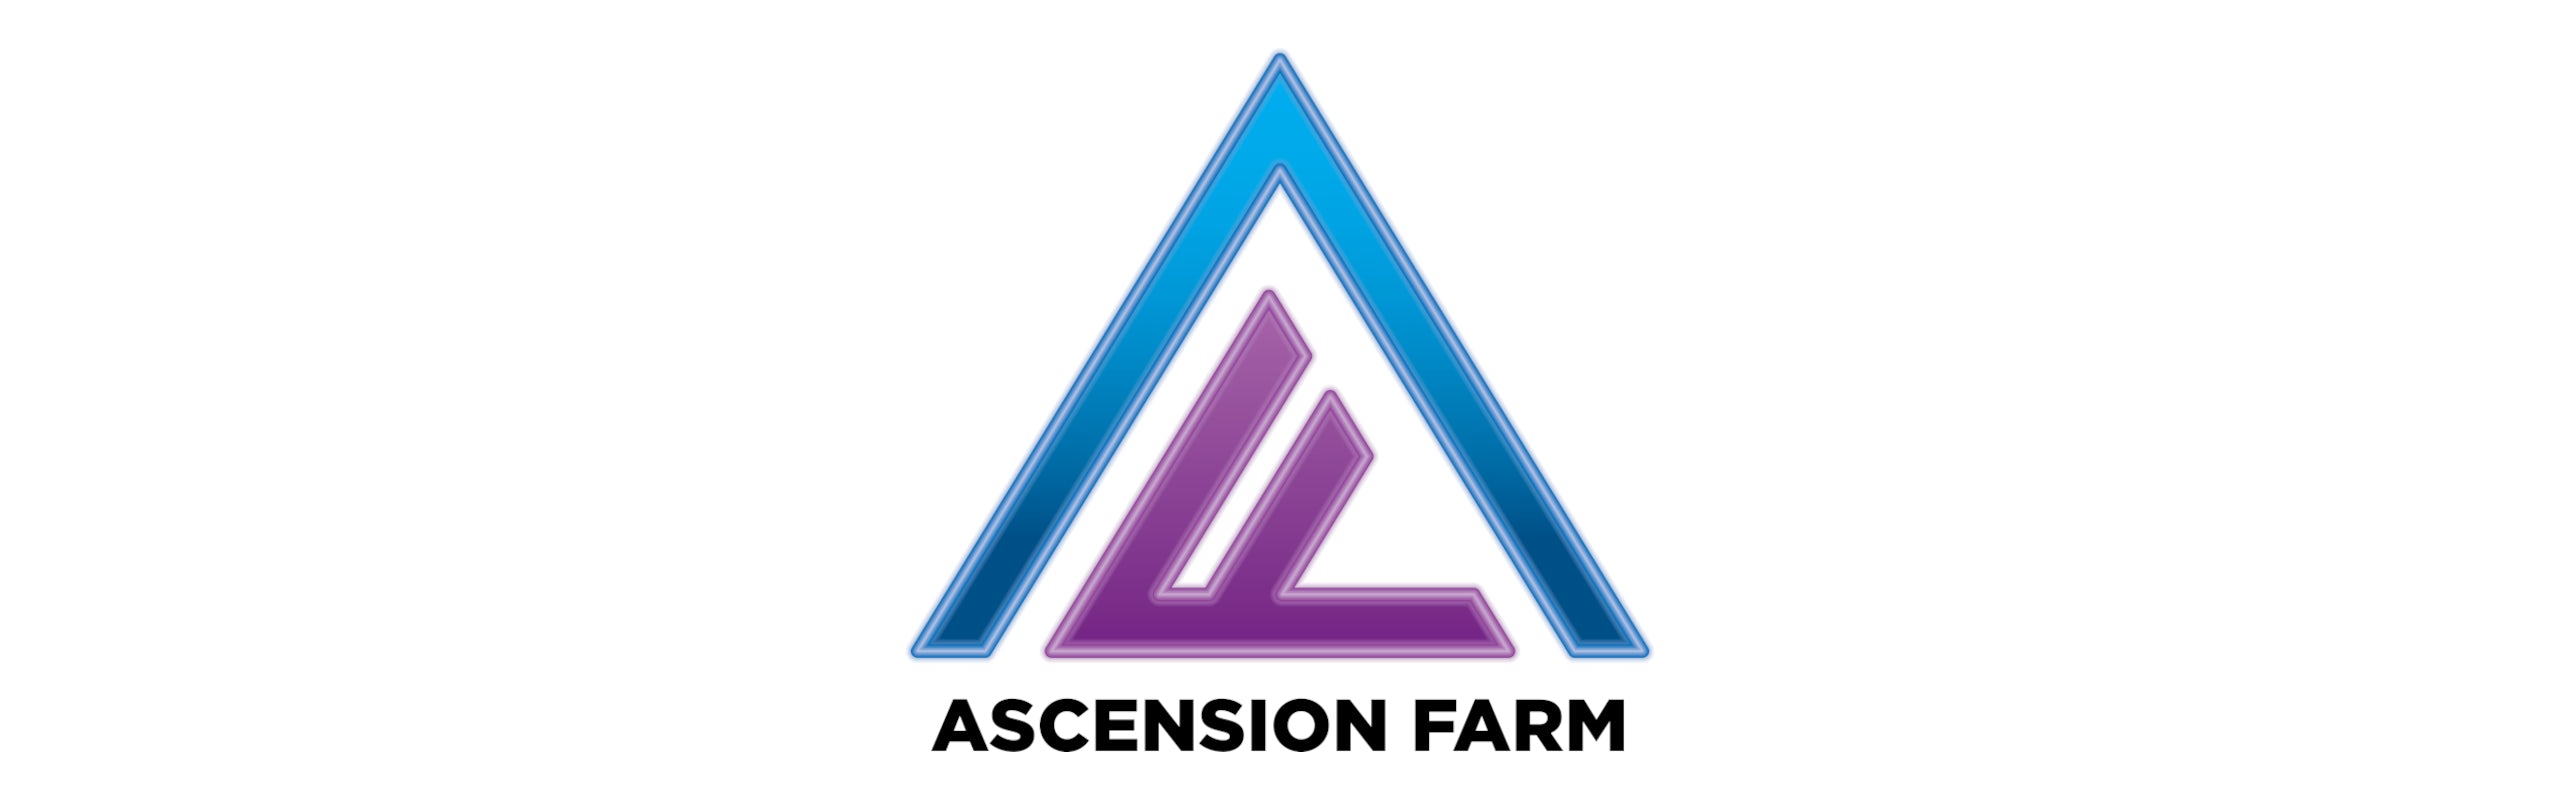 Ascension Farm banner